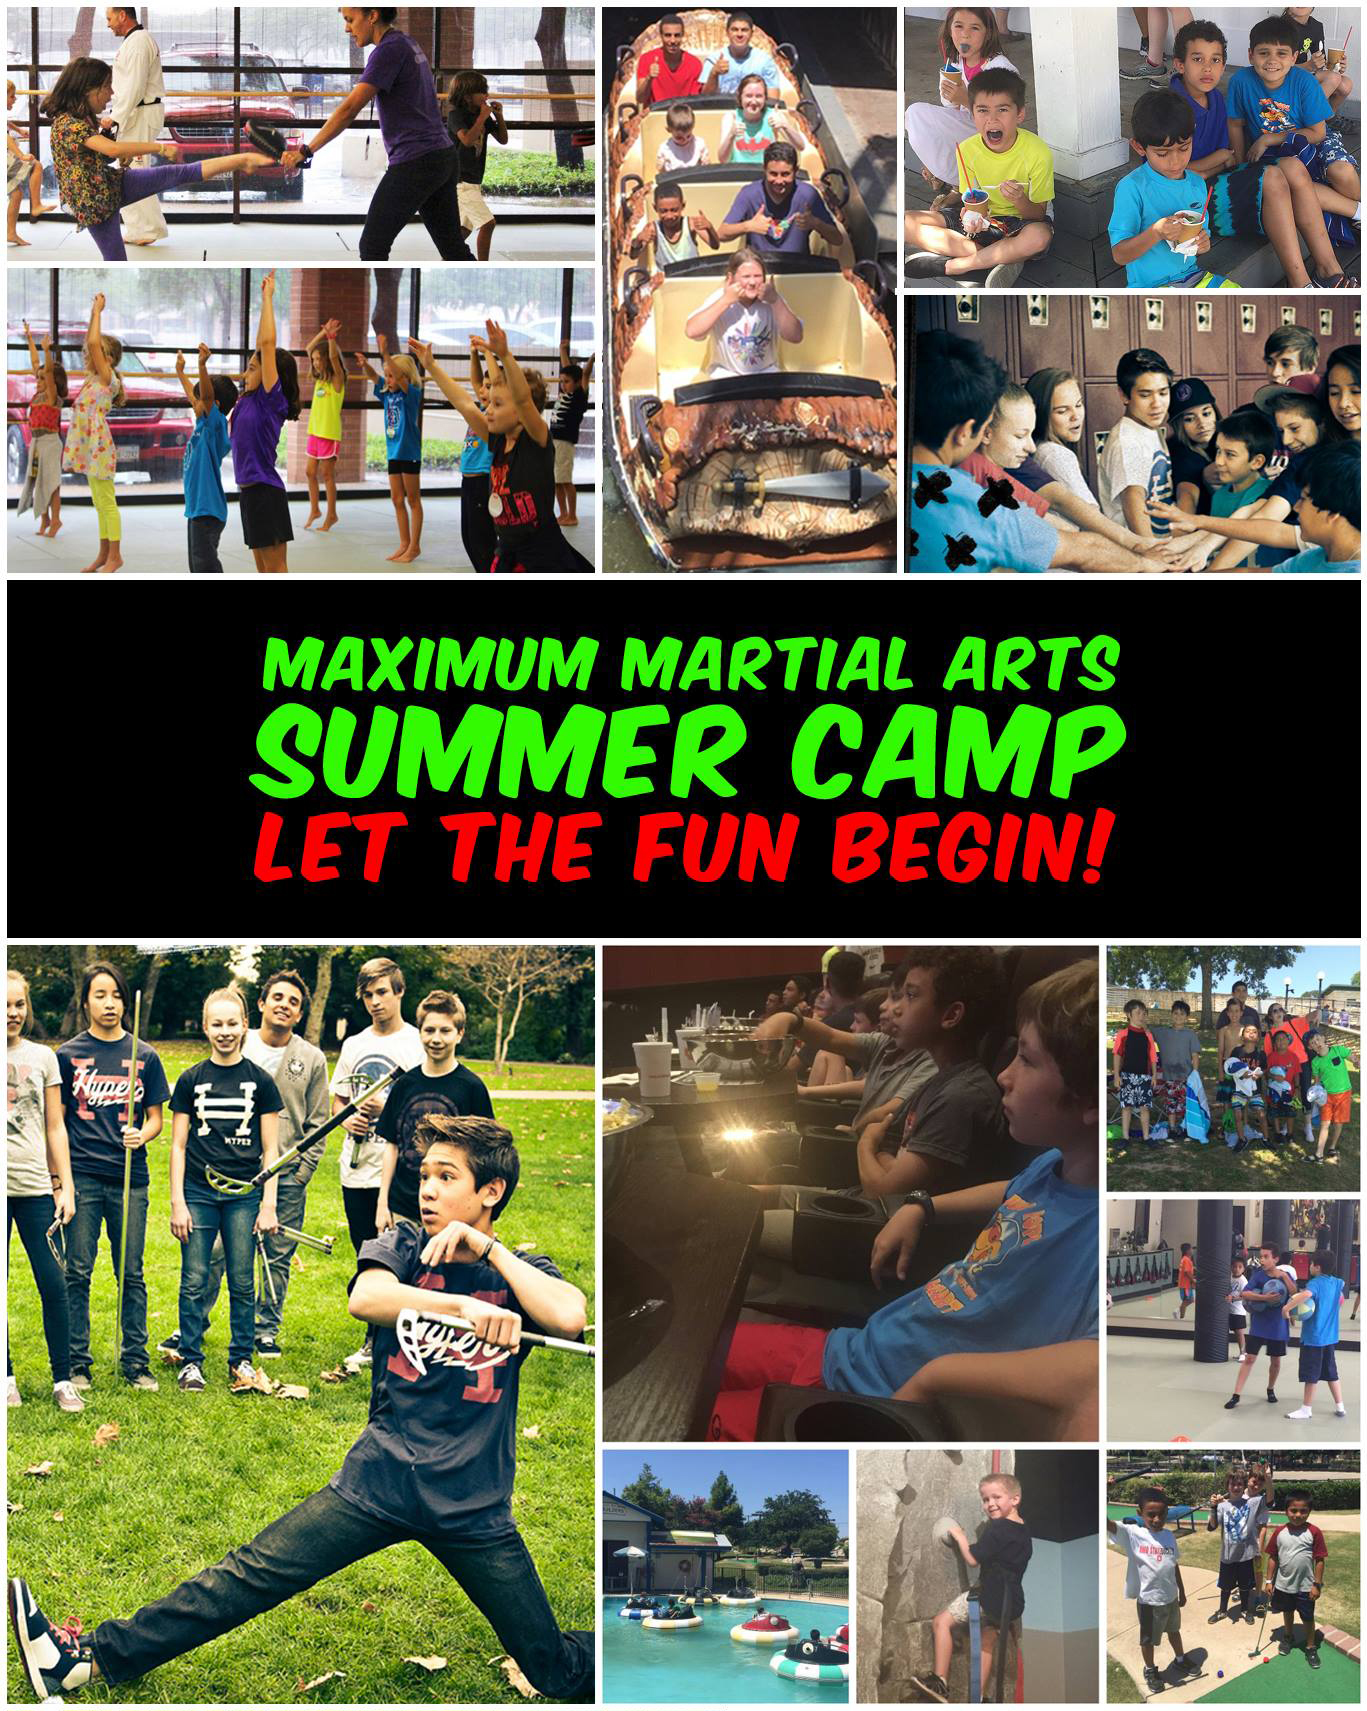 Max Martial Arts Taekwondo Summer Camp | Free Fun in Austin